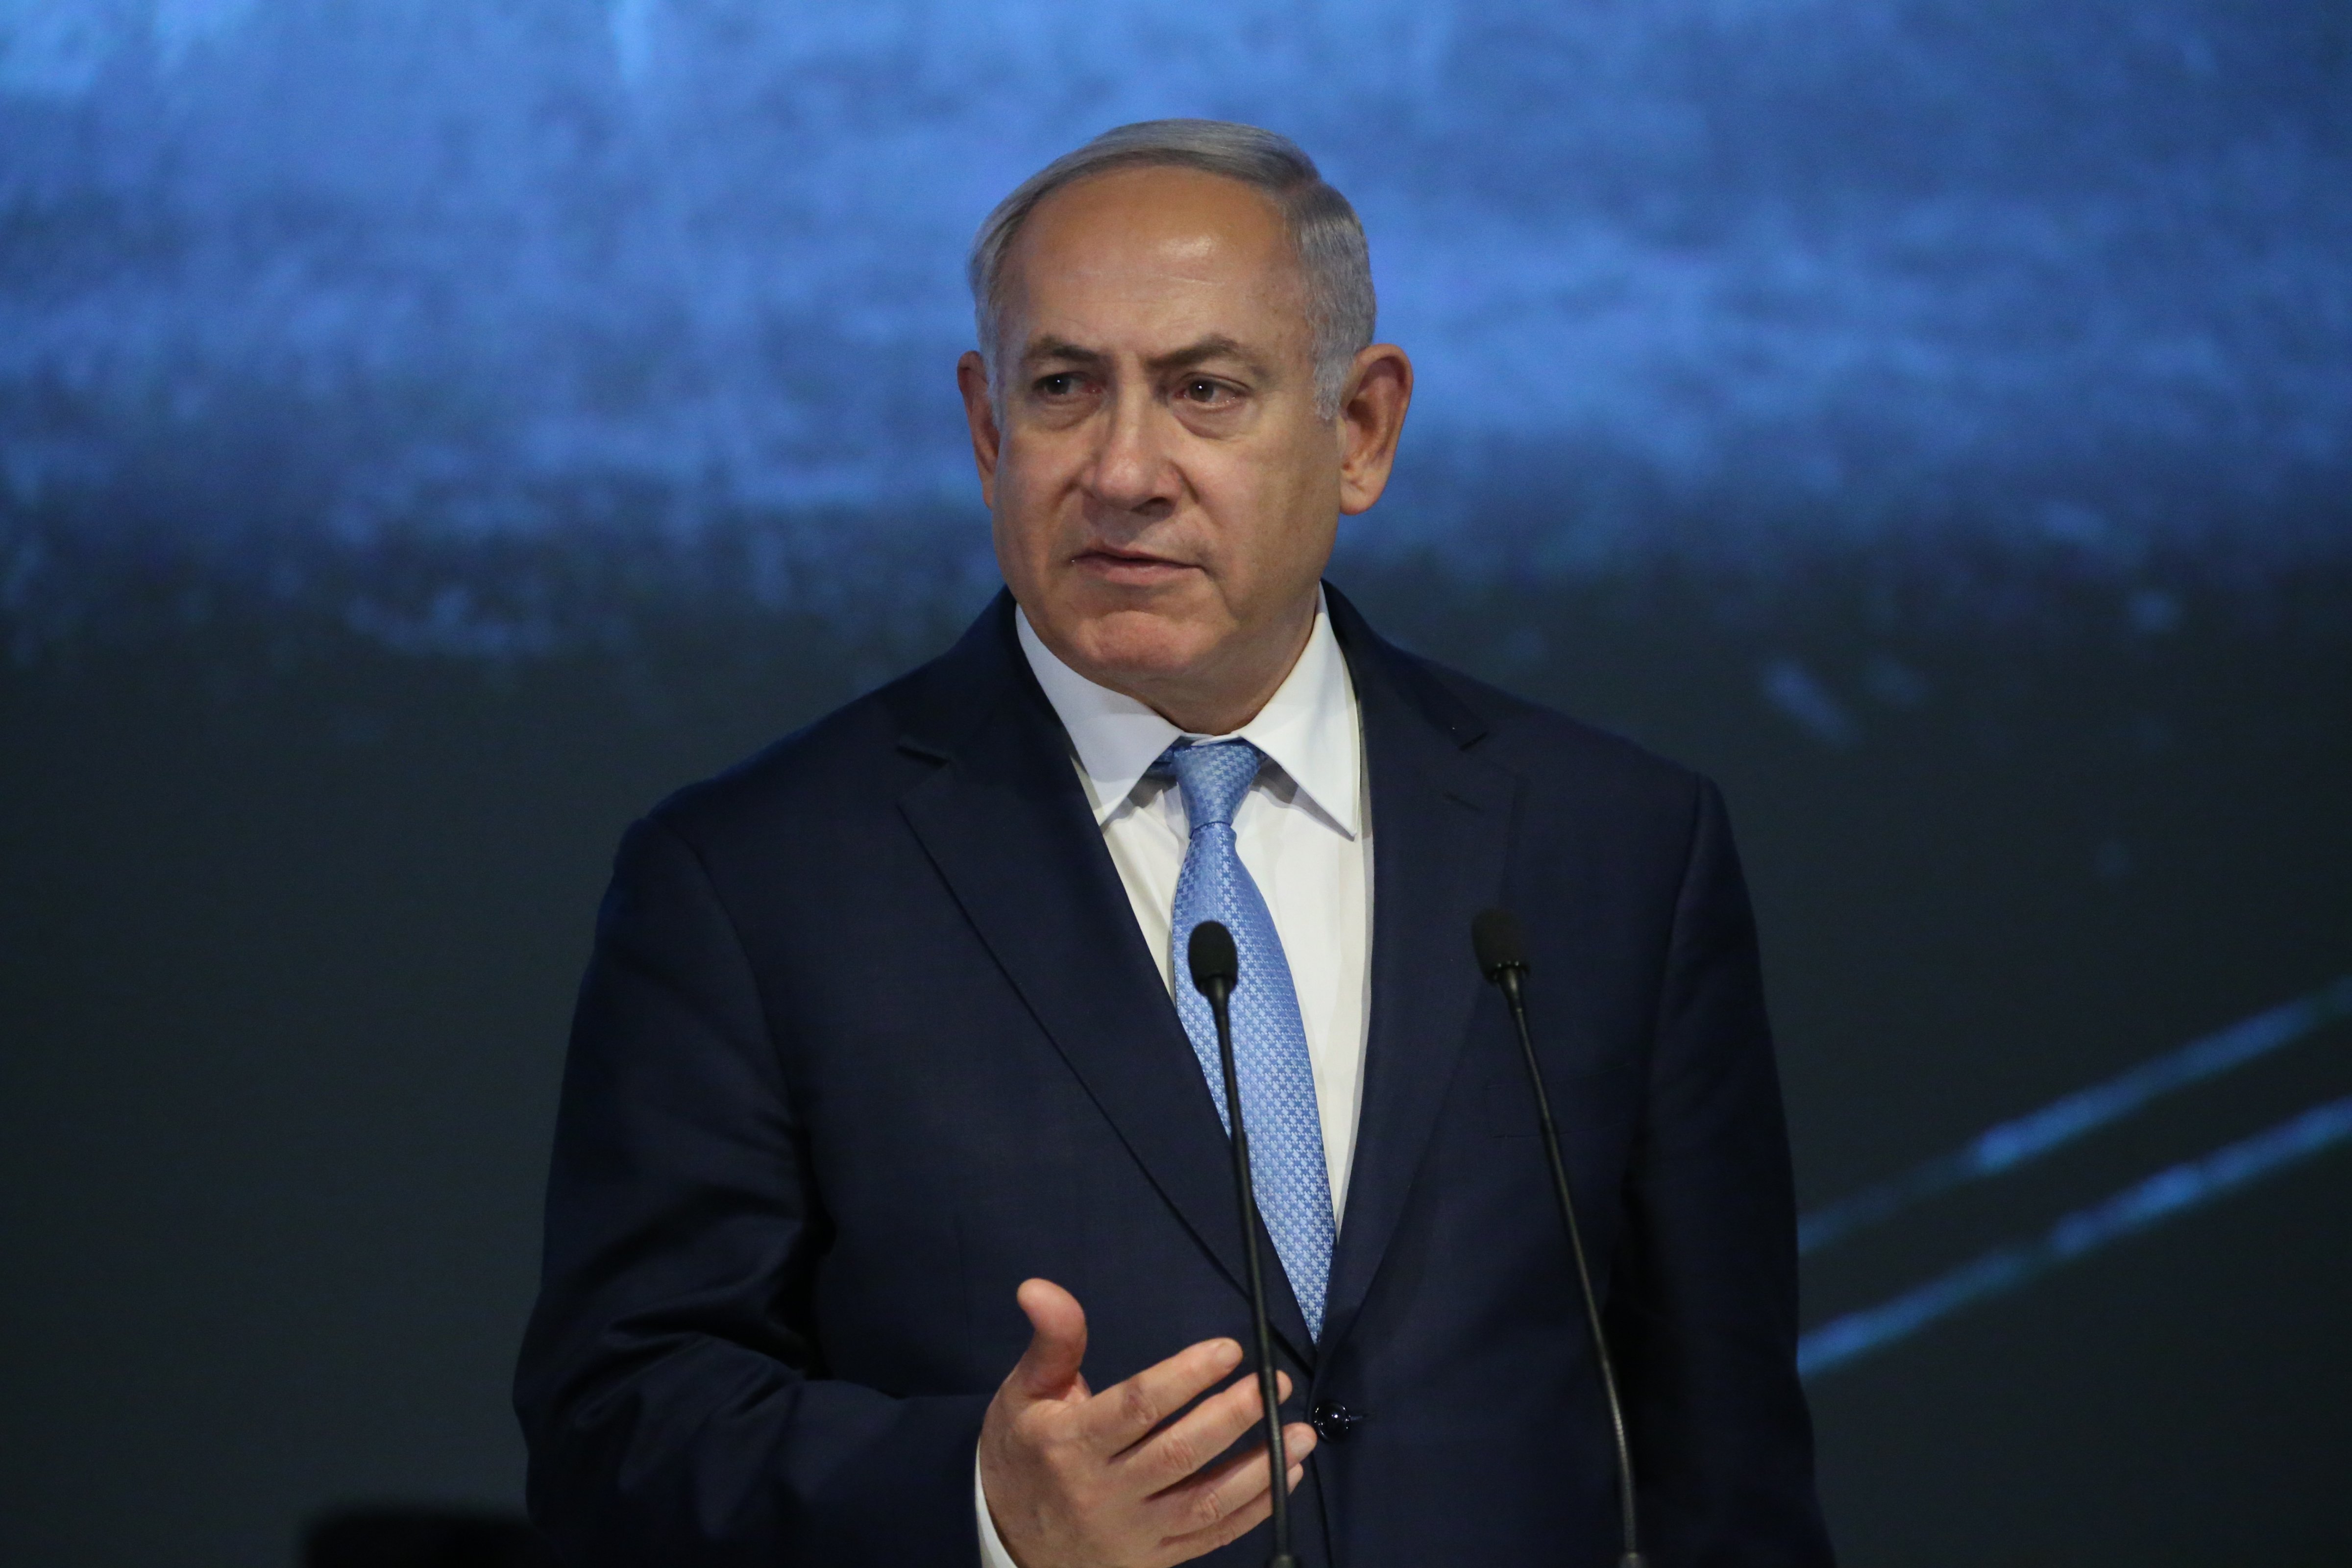 Israeli Prime Minister Benjamin Netanyahu speaks during a meeting at Moscow's Jewish Center on Jan. 29, 2018. (Mikhail Svetlov—Getty Images)